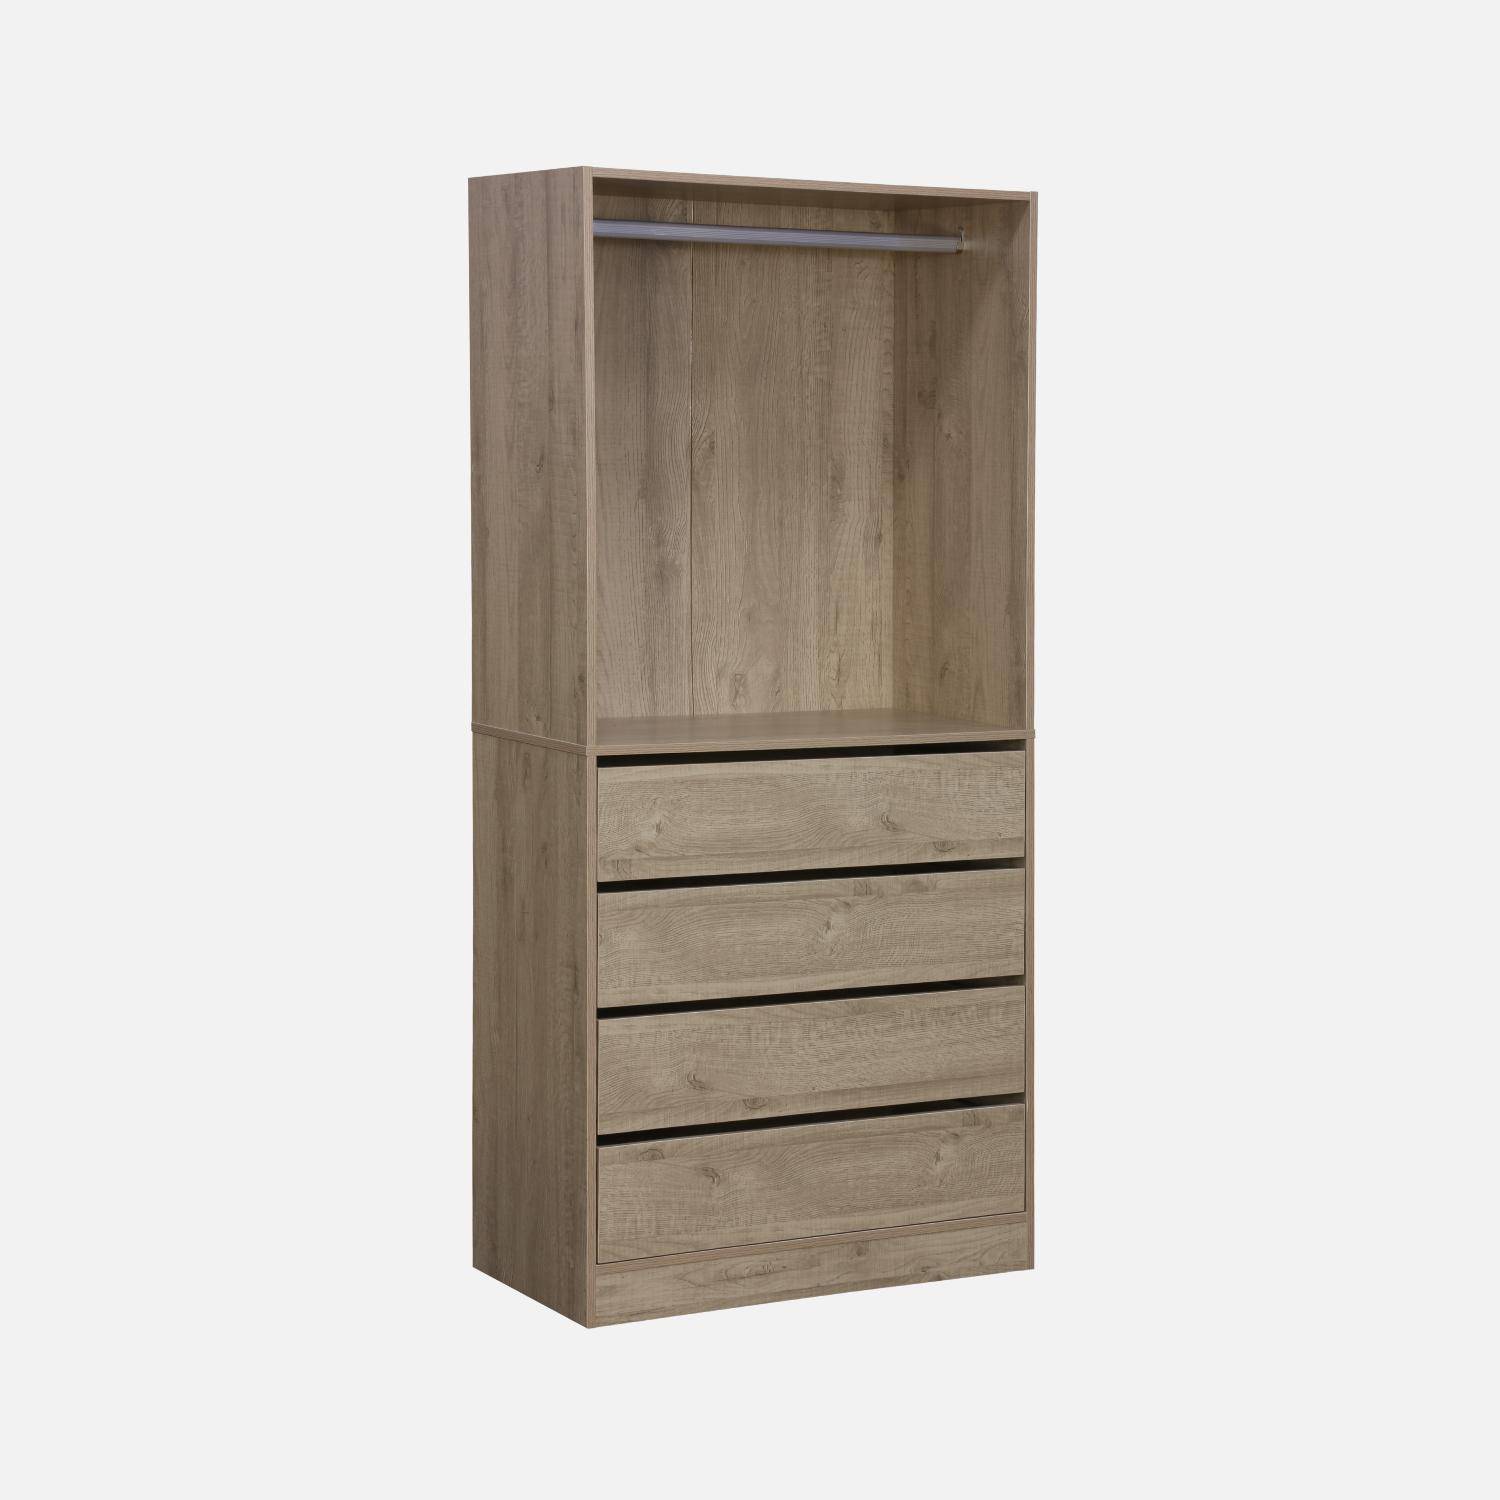 Modular open wardrobe drawer and rail unit, 60x45x180cm, Modulo, 4 drawers, 1 clothes rail, Natural,sweeek,Photo4